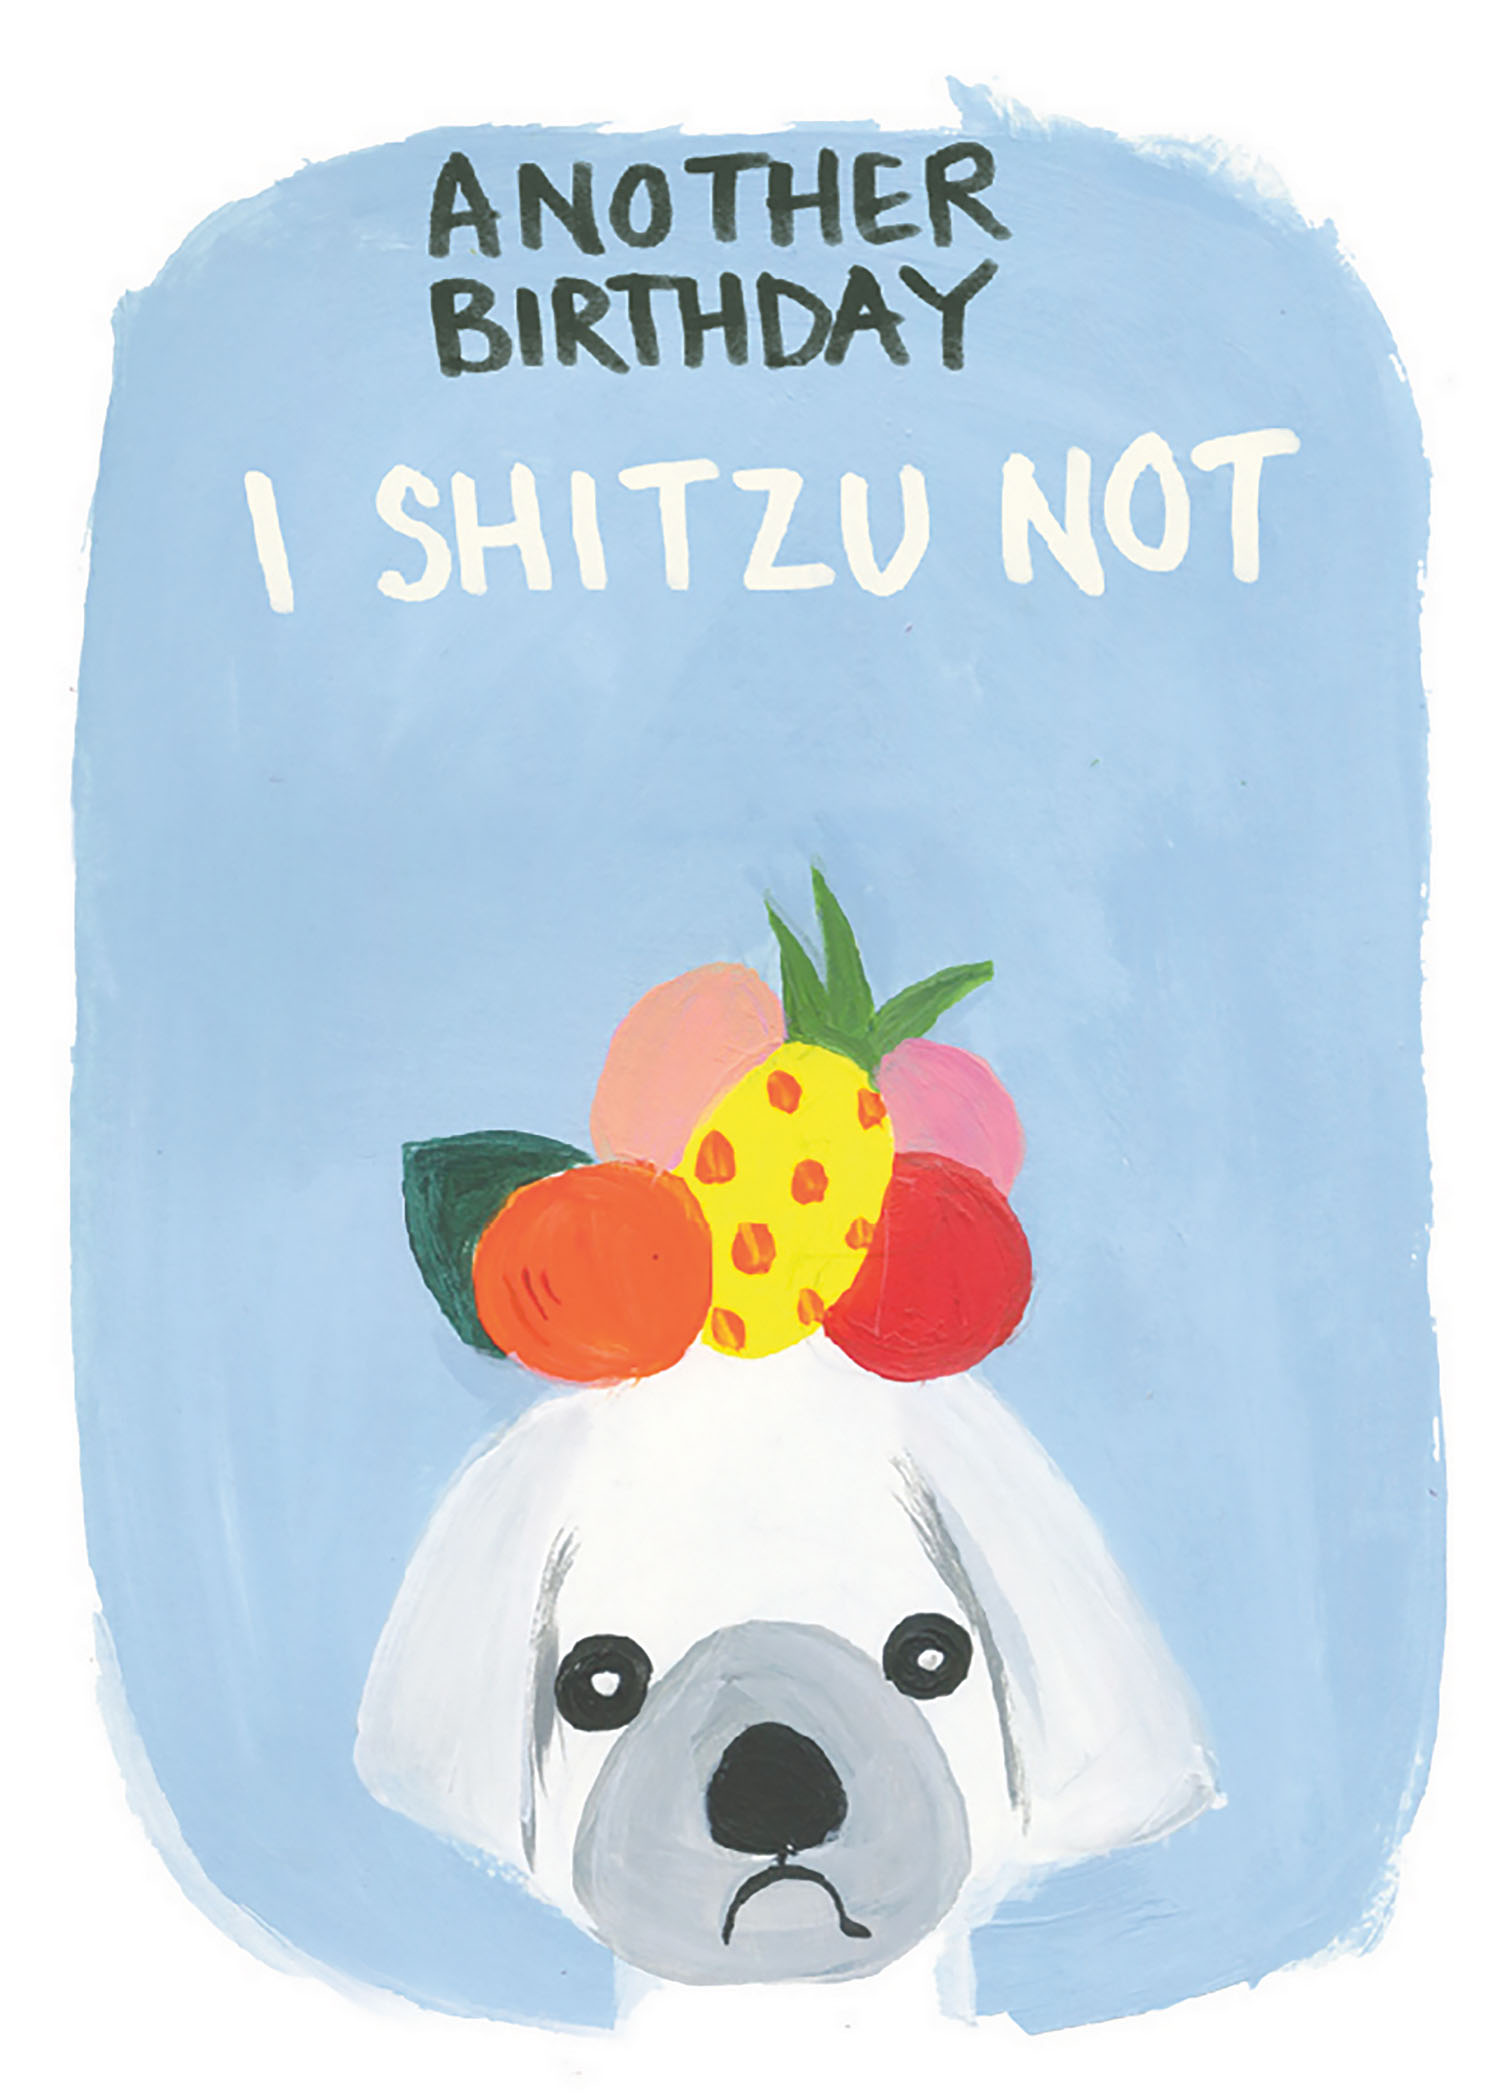 Shitzu Birthday card by Sooshichacha